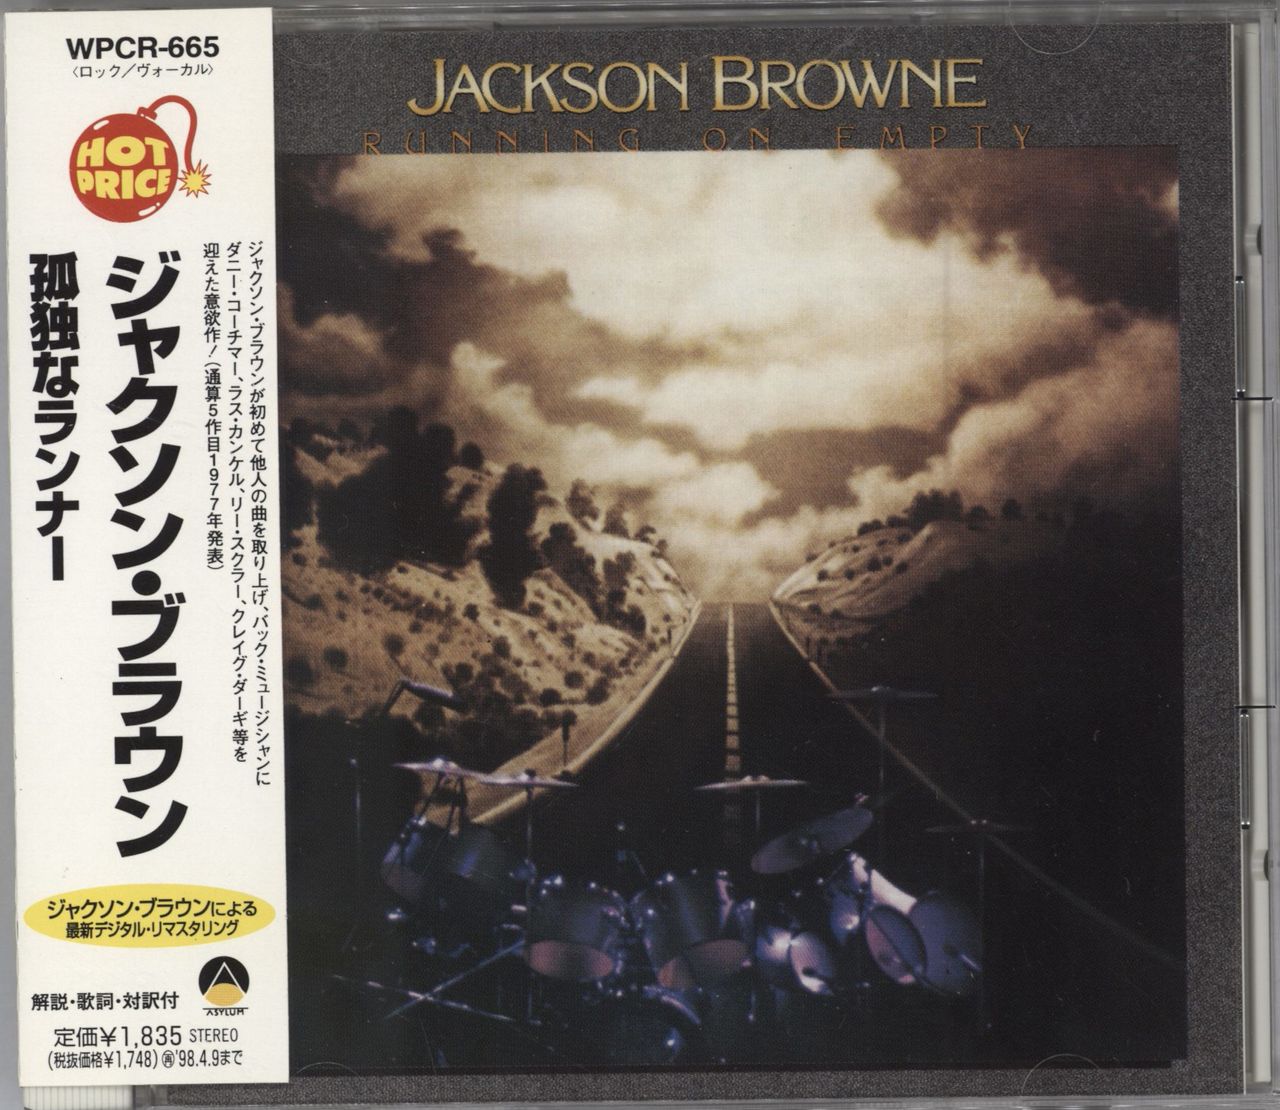 Jackson Browne Running On Empty Japanese CD album